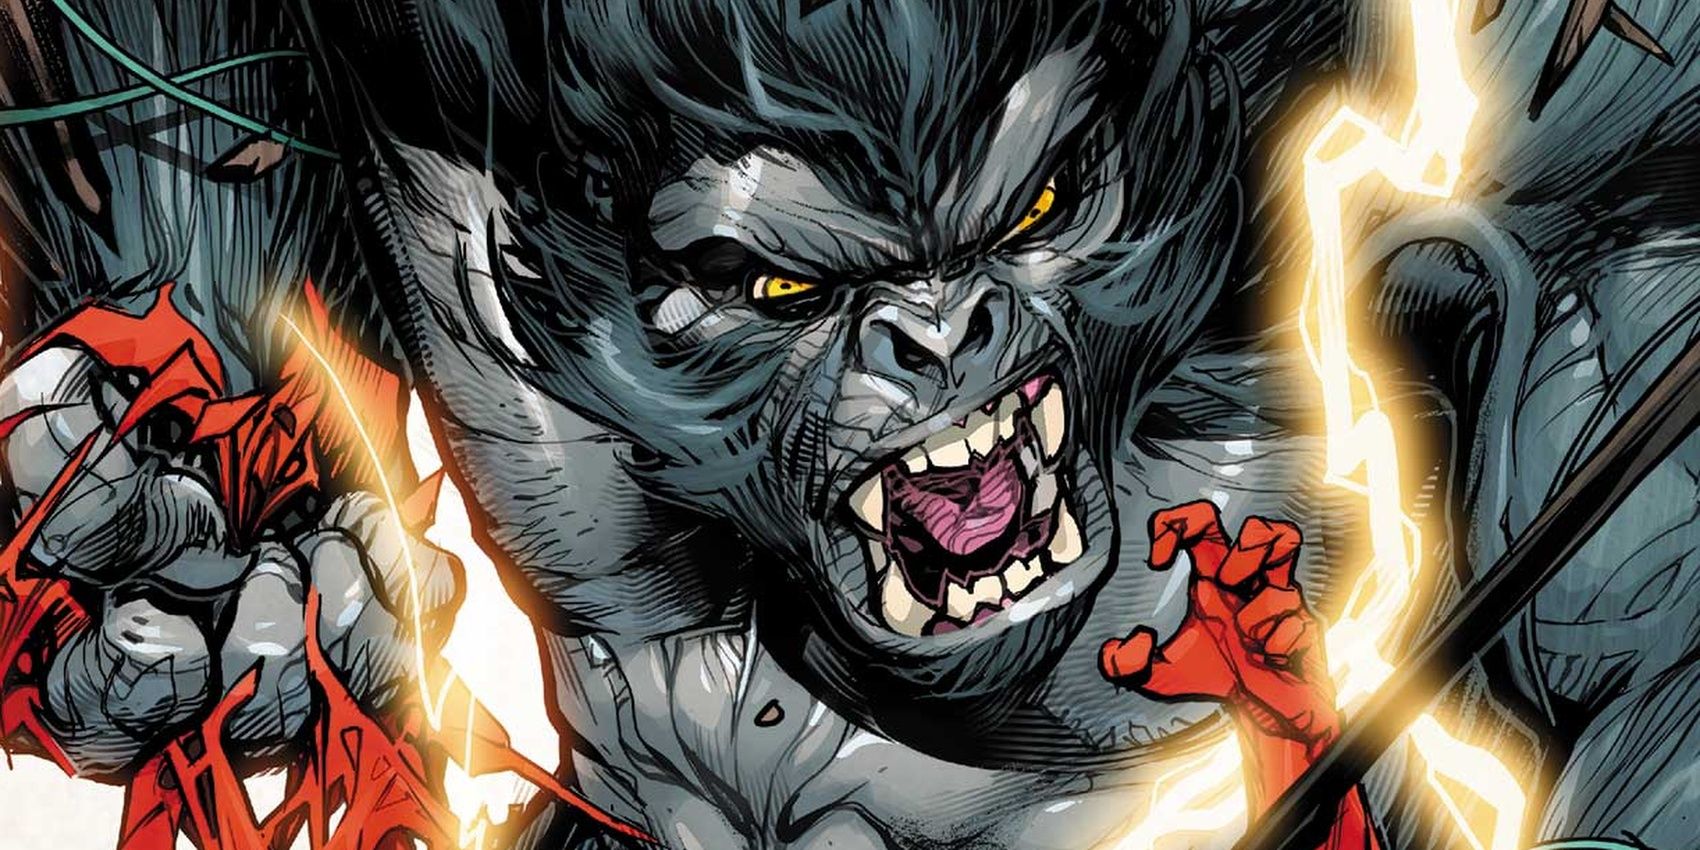 DC Gorilla Grodd battling The Flash